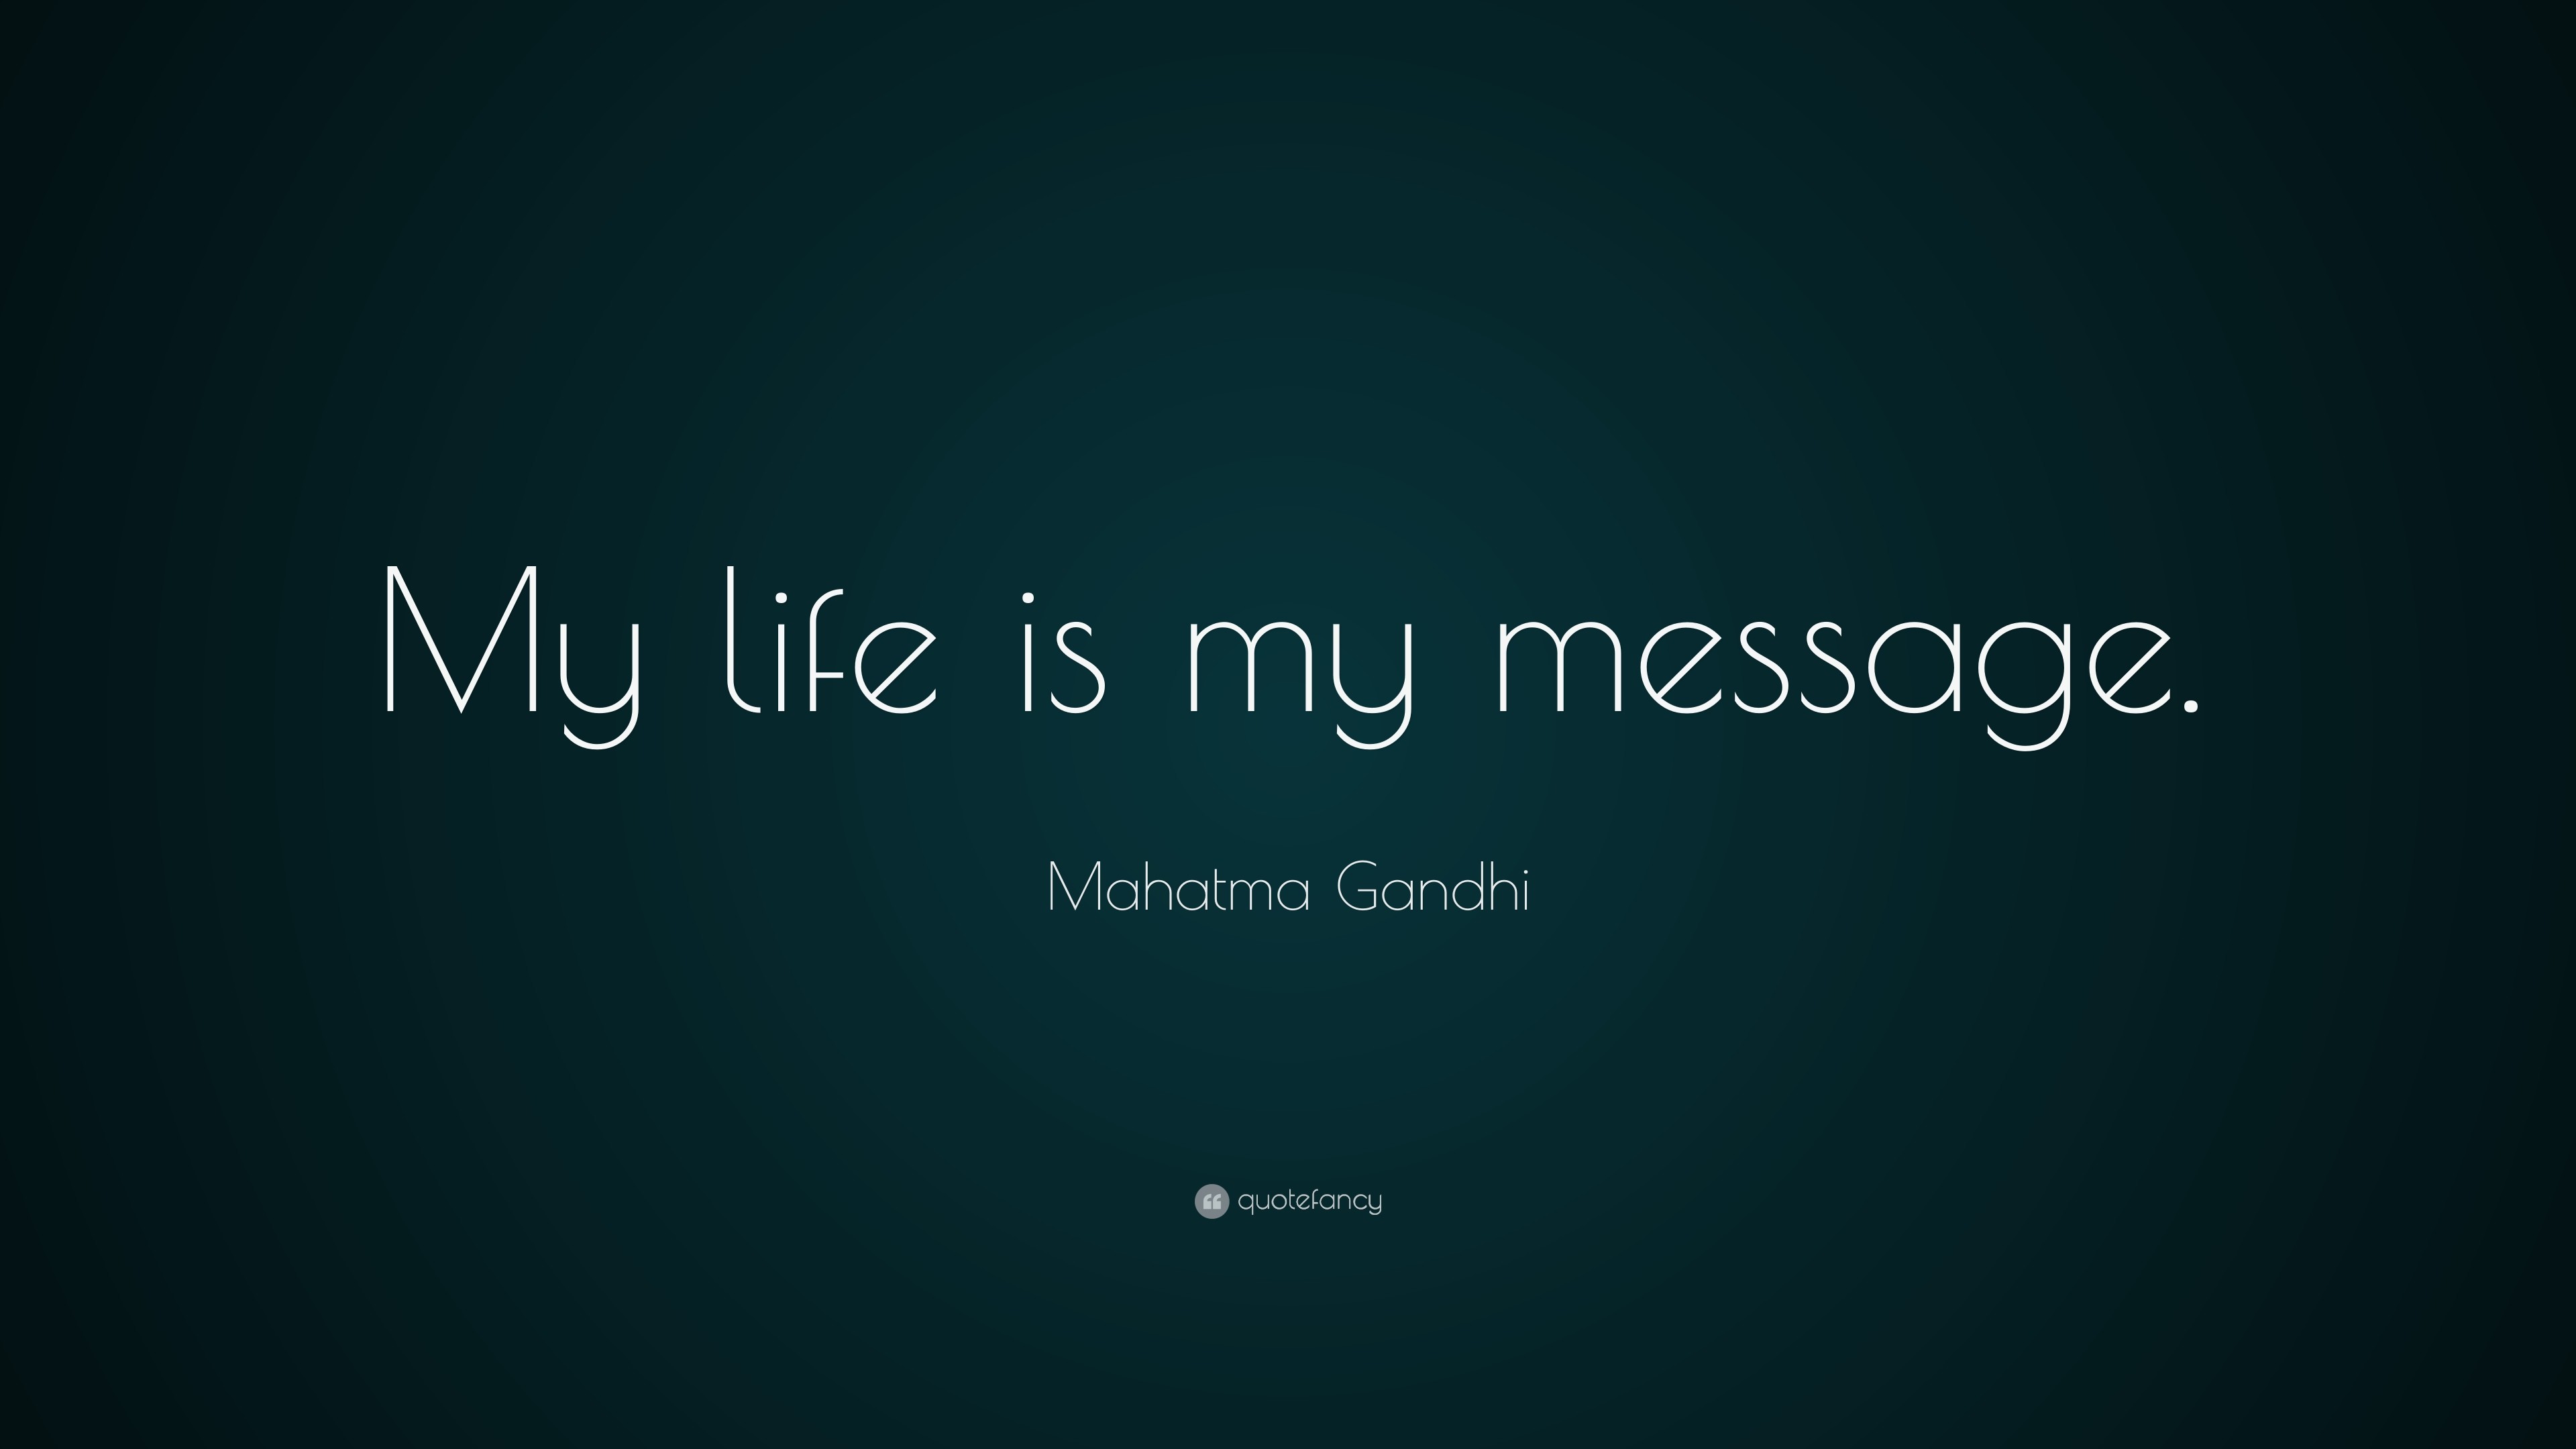 3840x2160 Mahatma Gandhi Quote: “My life is my message.”